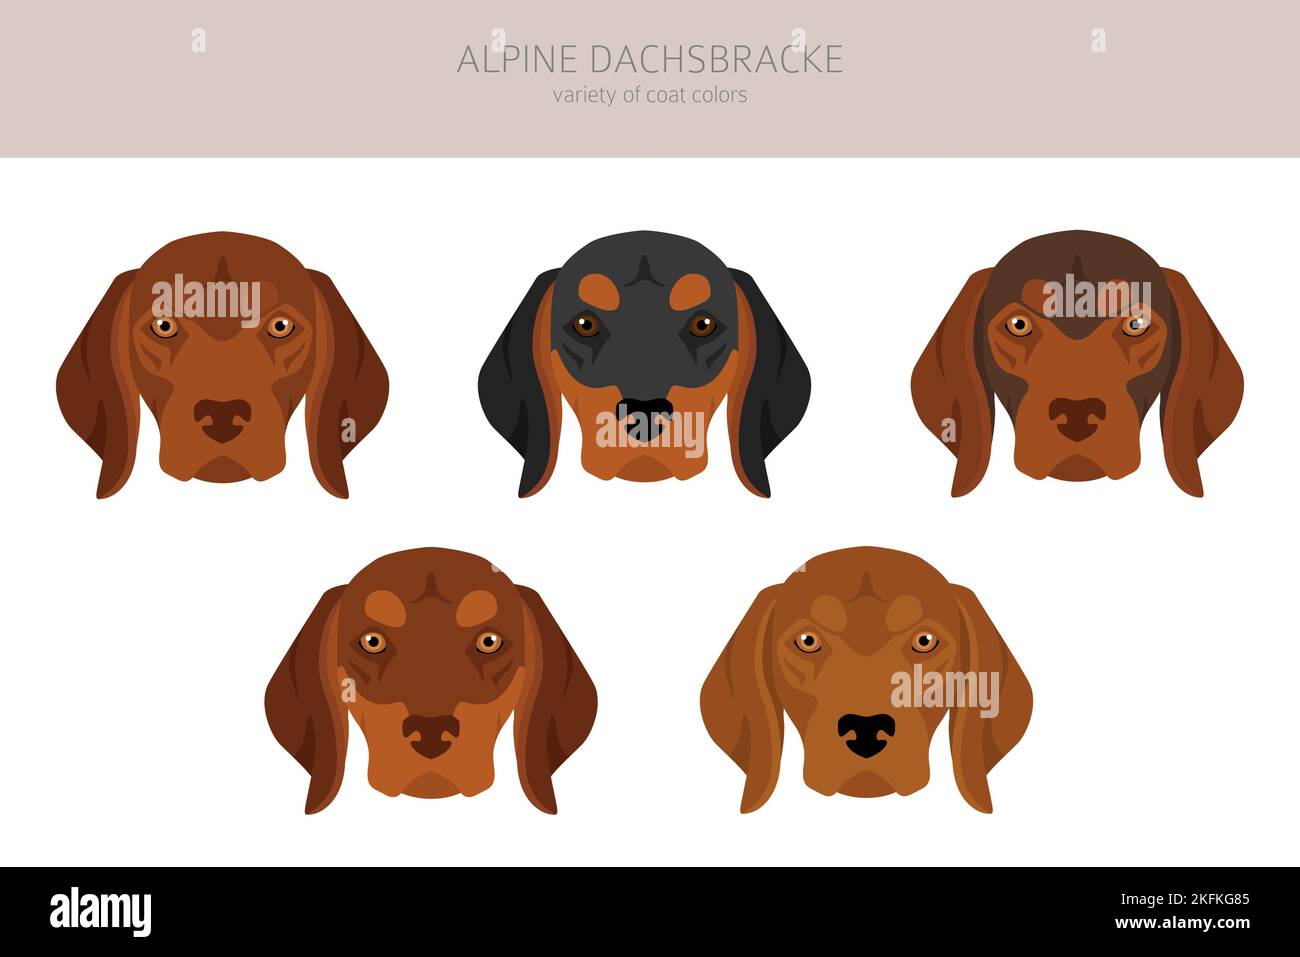 Alpine Dachsbracke clipart. Different poses, coat colors set.  Vector illustration Stock Vector